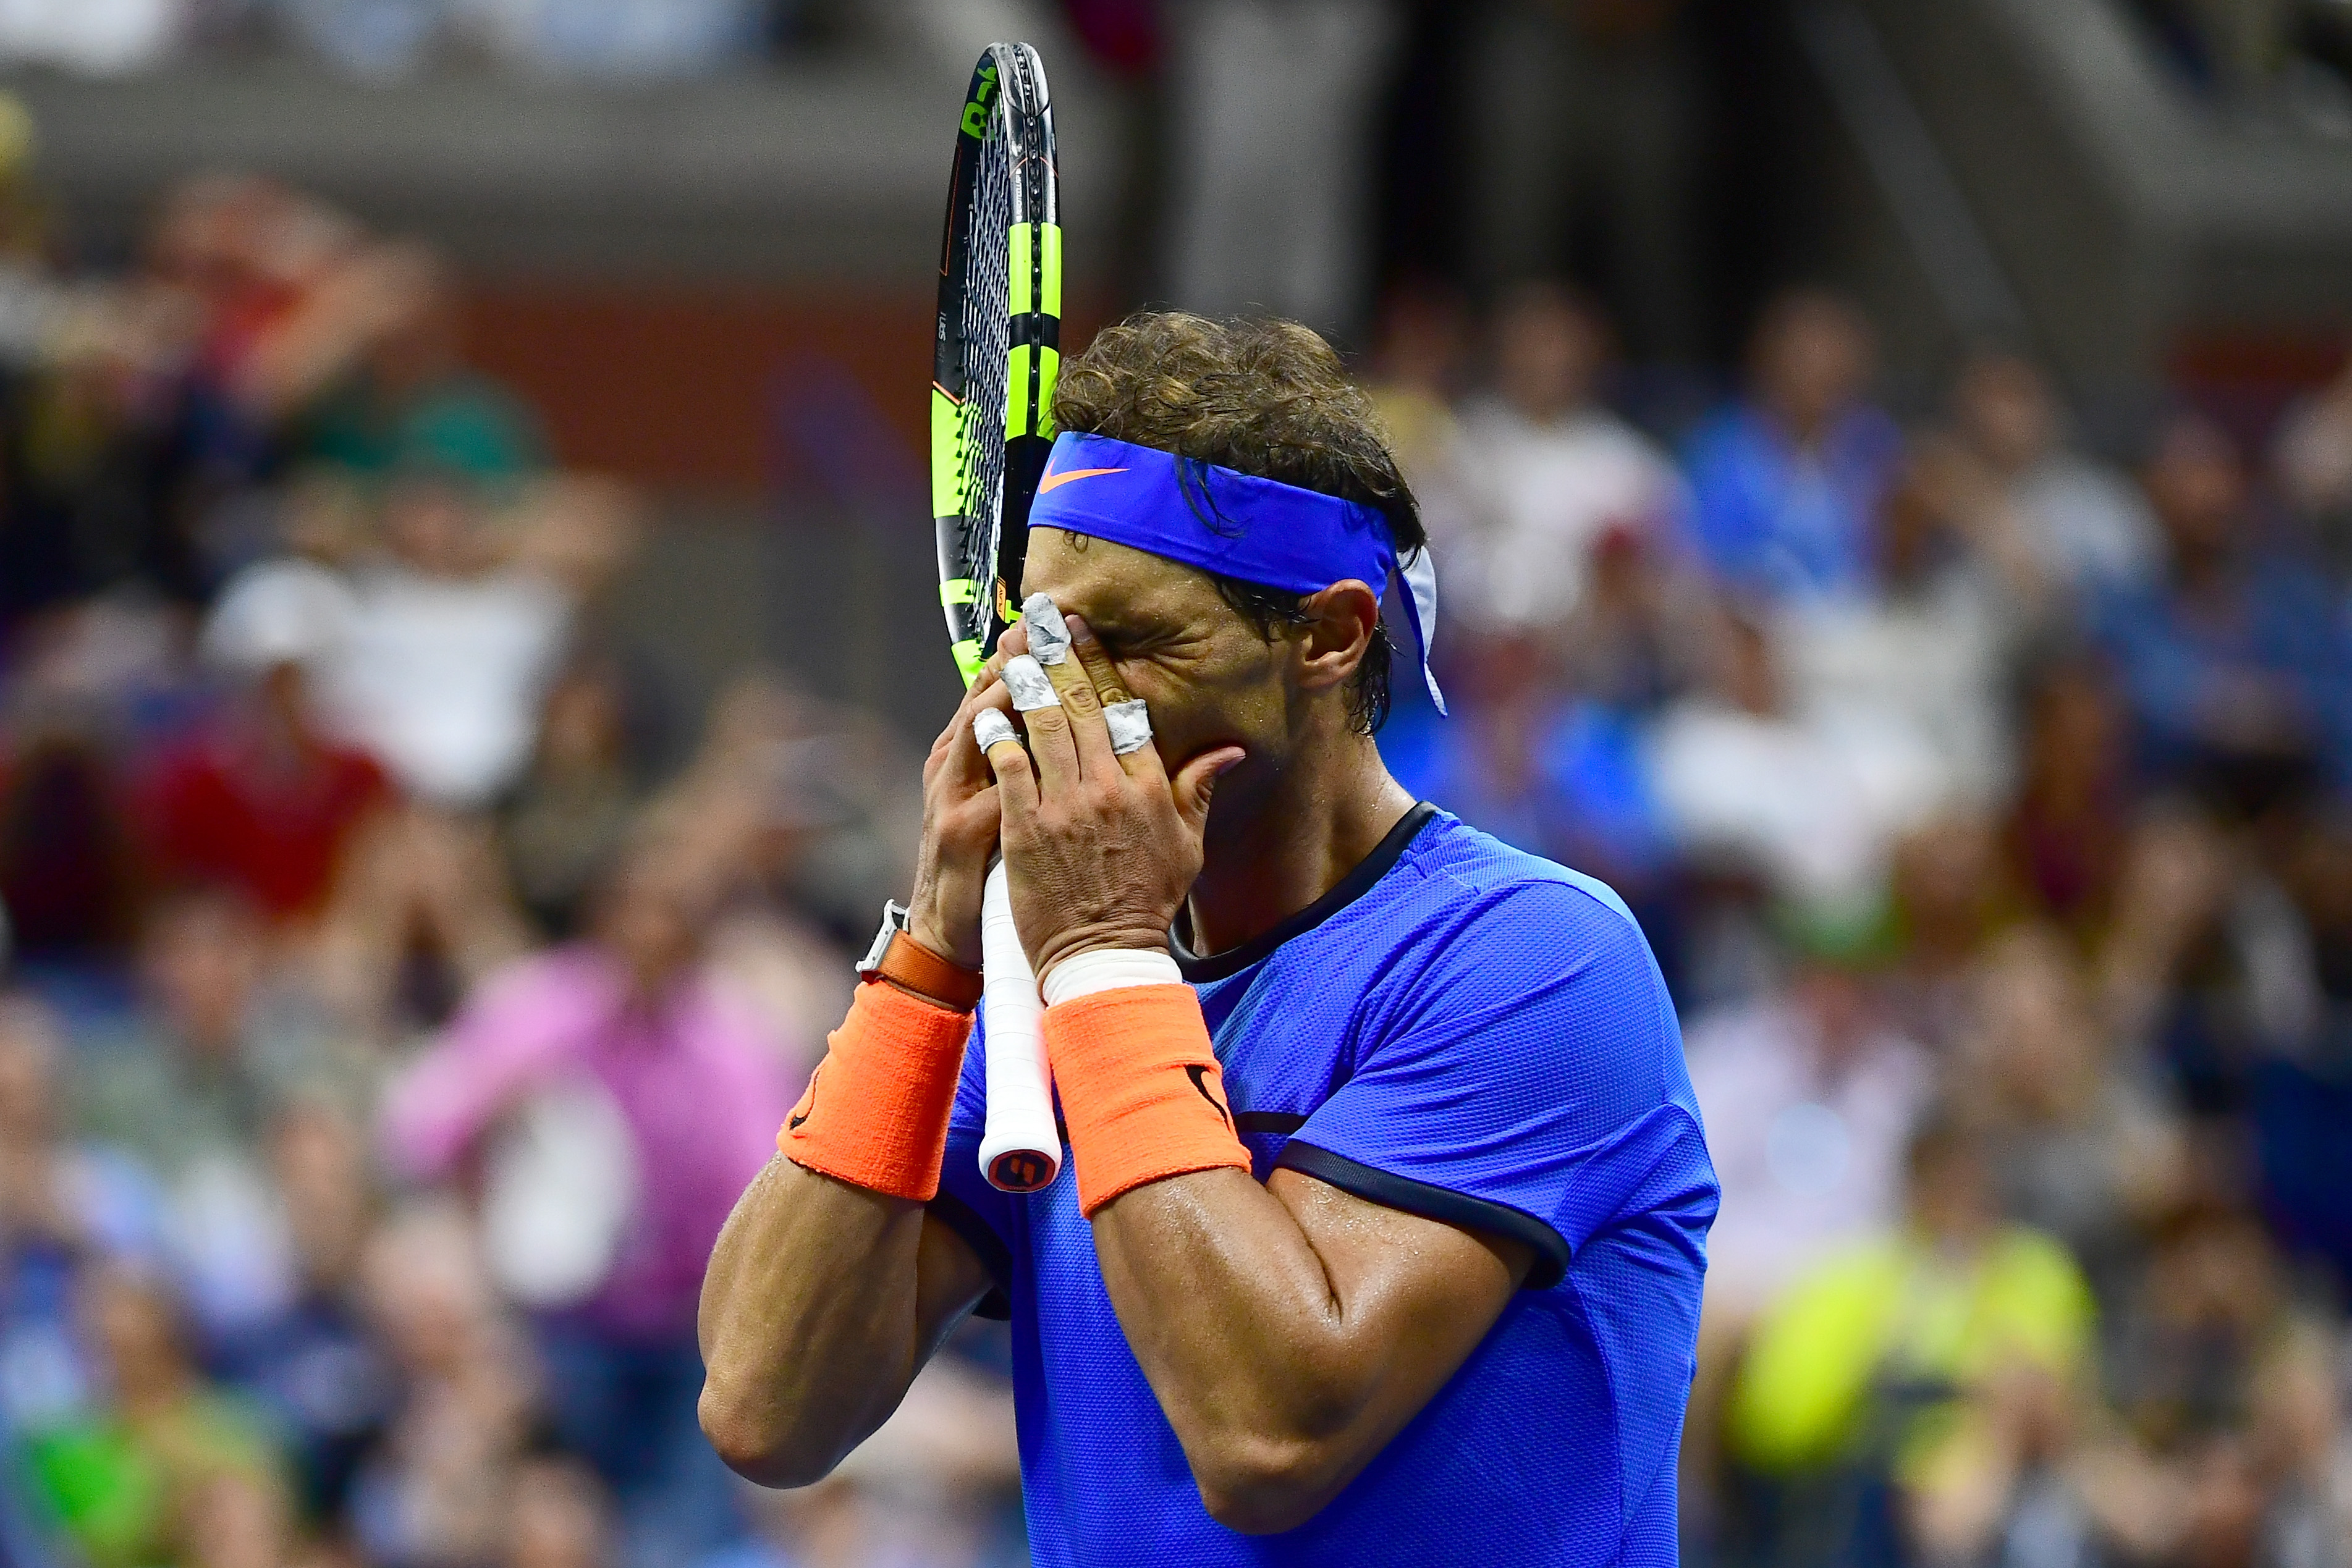 Paris Masters Round Up | Rafael Nadal withdraws with knee injury; Marin Cilic, Del Potro crash out